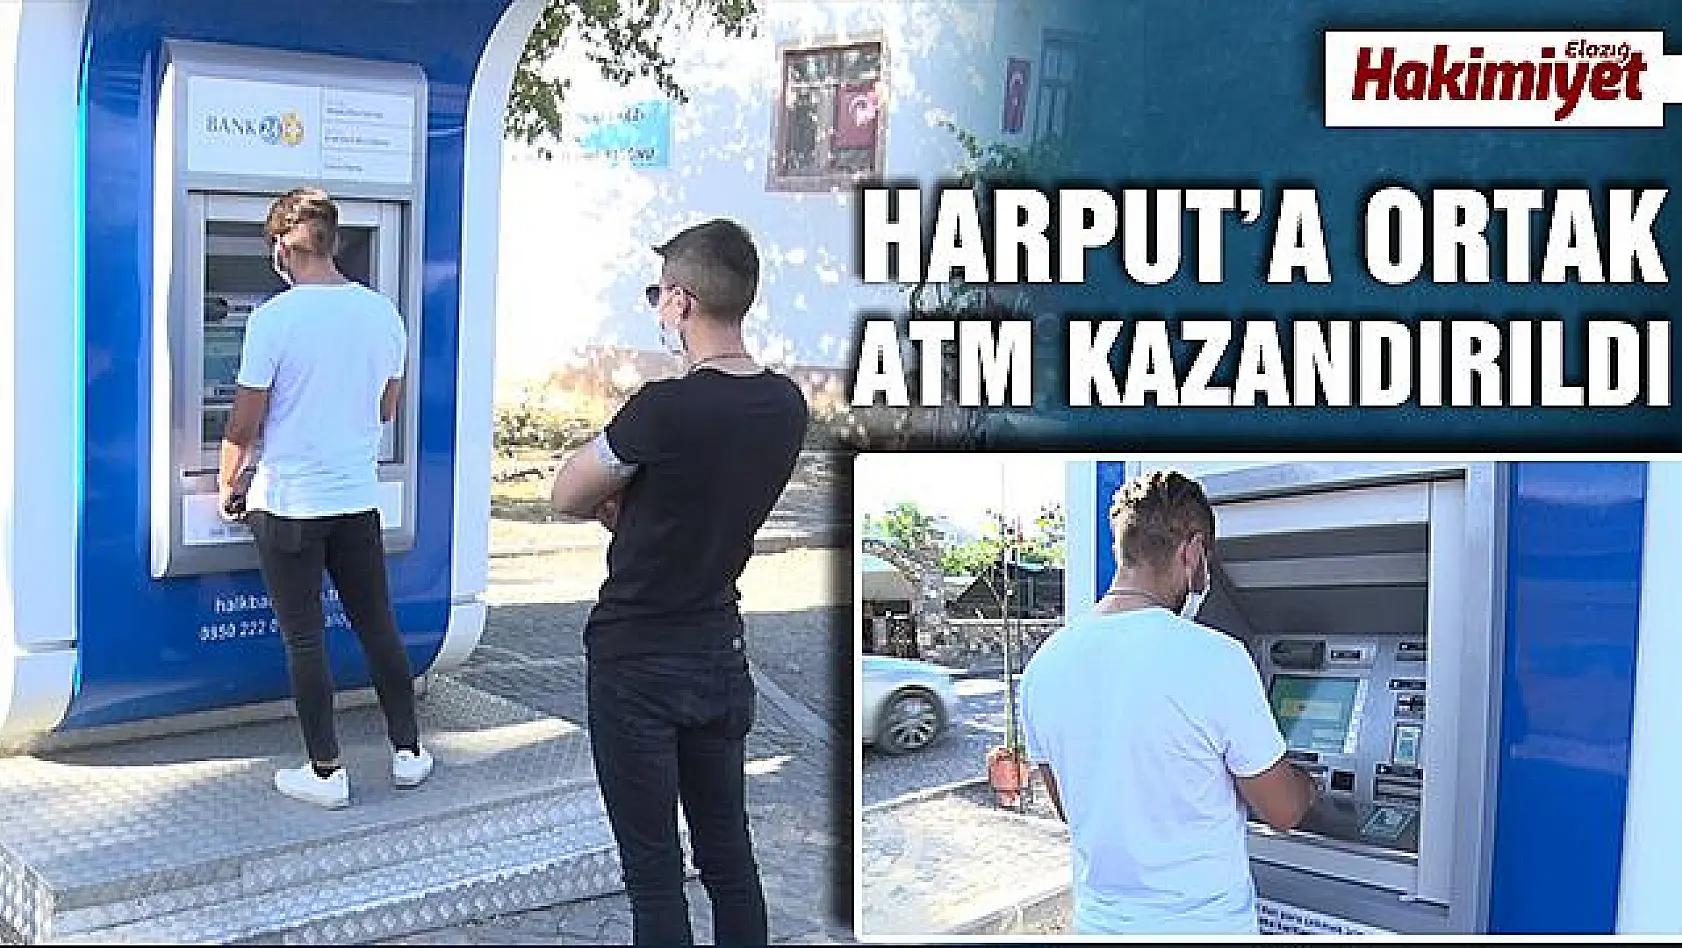 HARPUT'A ORTAK ATM KAZANDIRILDI